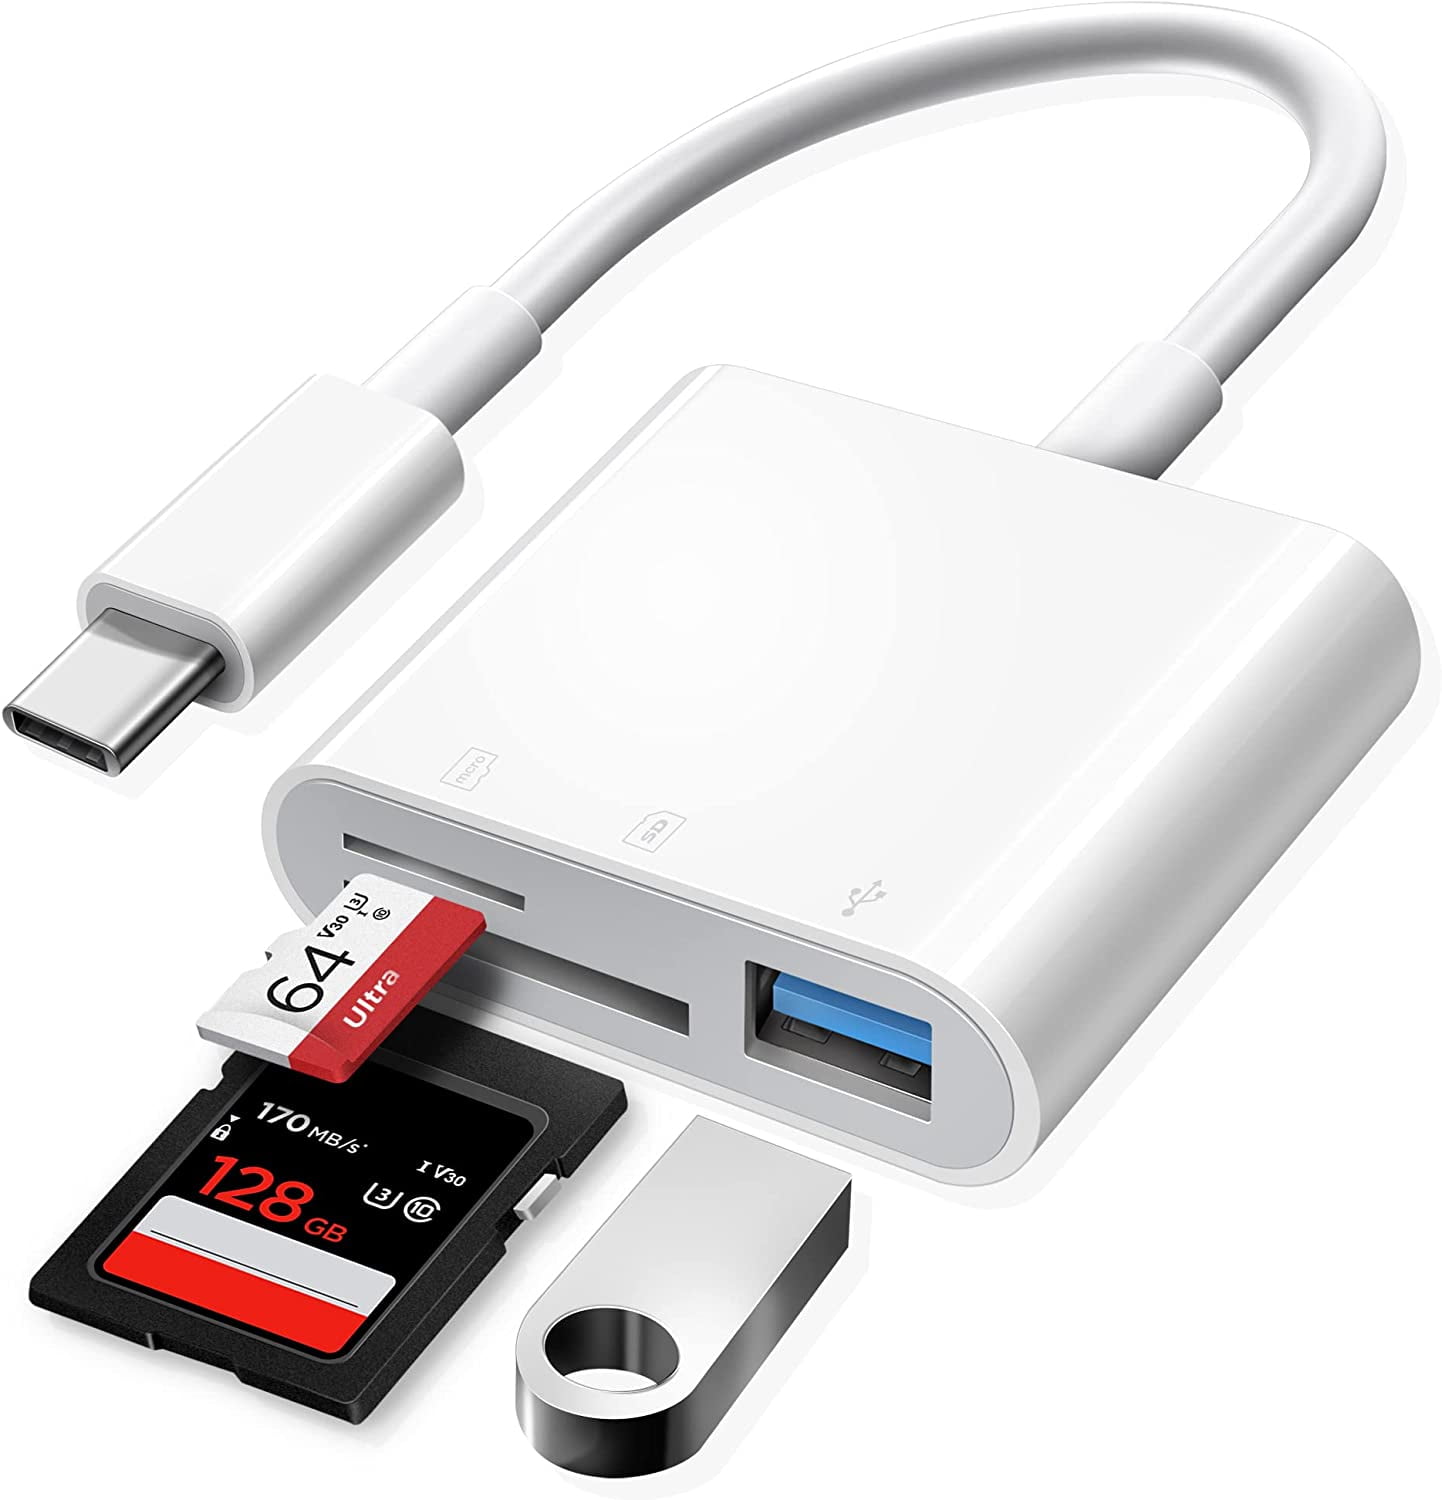 USB C SD Card Reader, Askfv USBC to SD Card Reader for iPad/Mac, Trail Camera USB-C SD Card Reader Viewer for iMac, iPad Pro/Air/Mini, MacBook Pro/Air, Galaxy, and More - Walmart.com